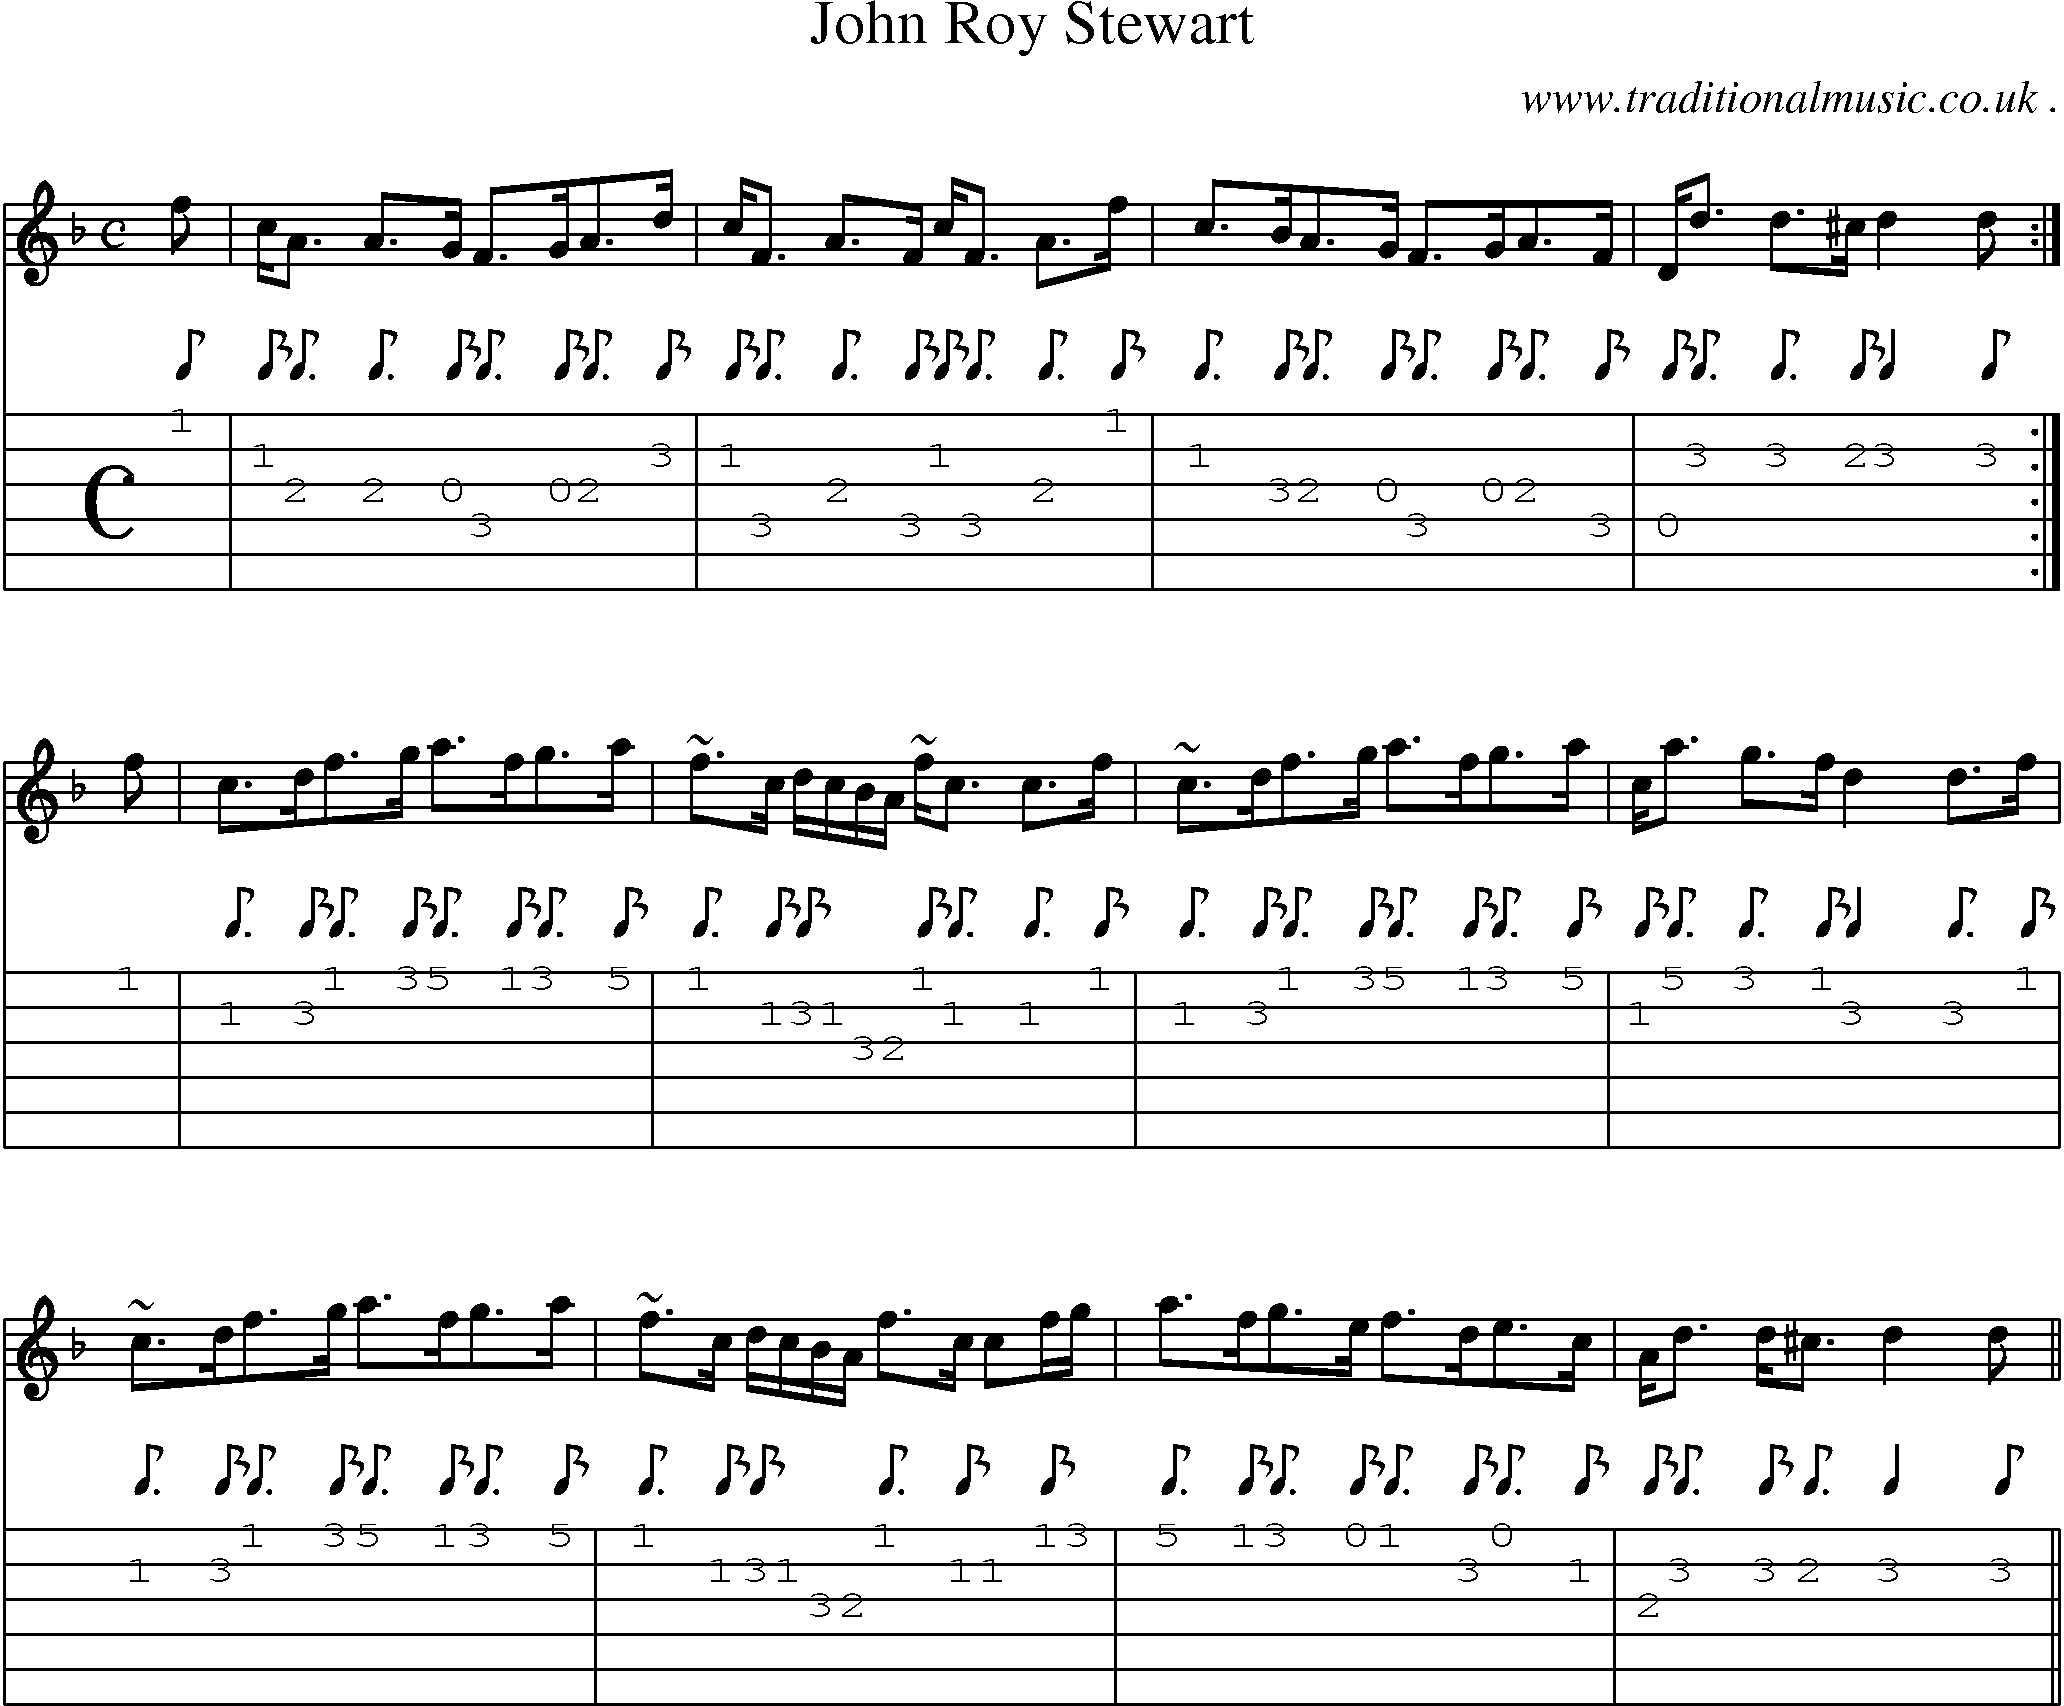 Sheet-music  score, Chords and Guitar Tabs for John Roy Stewart